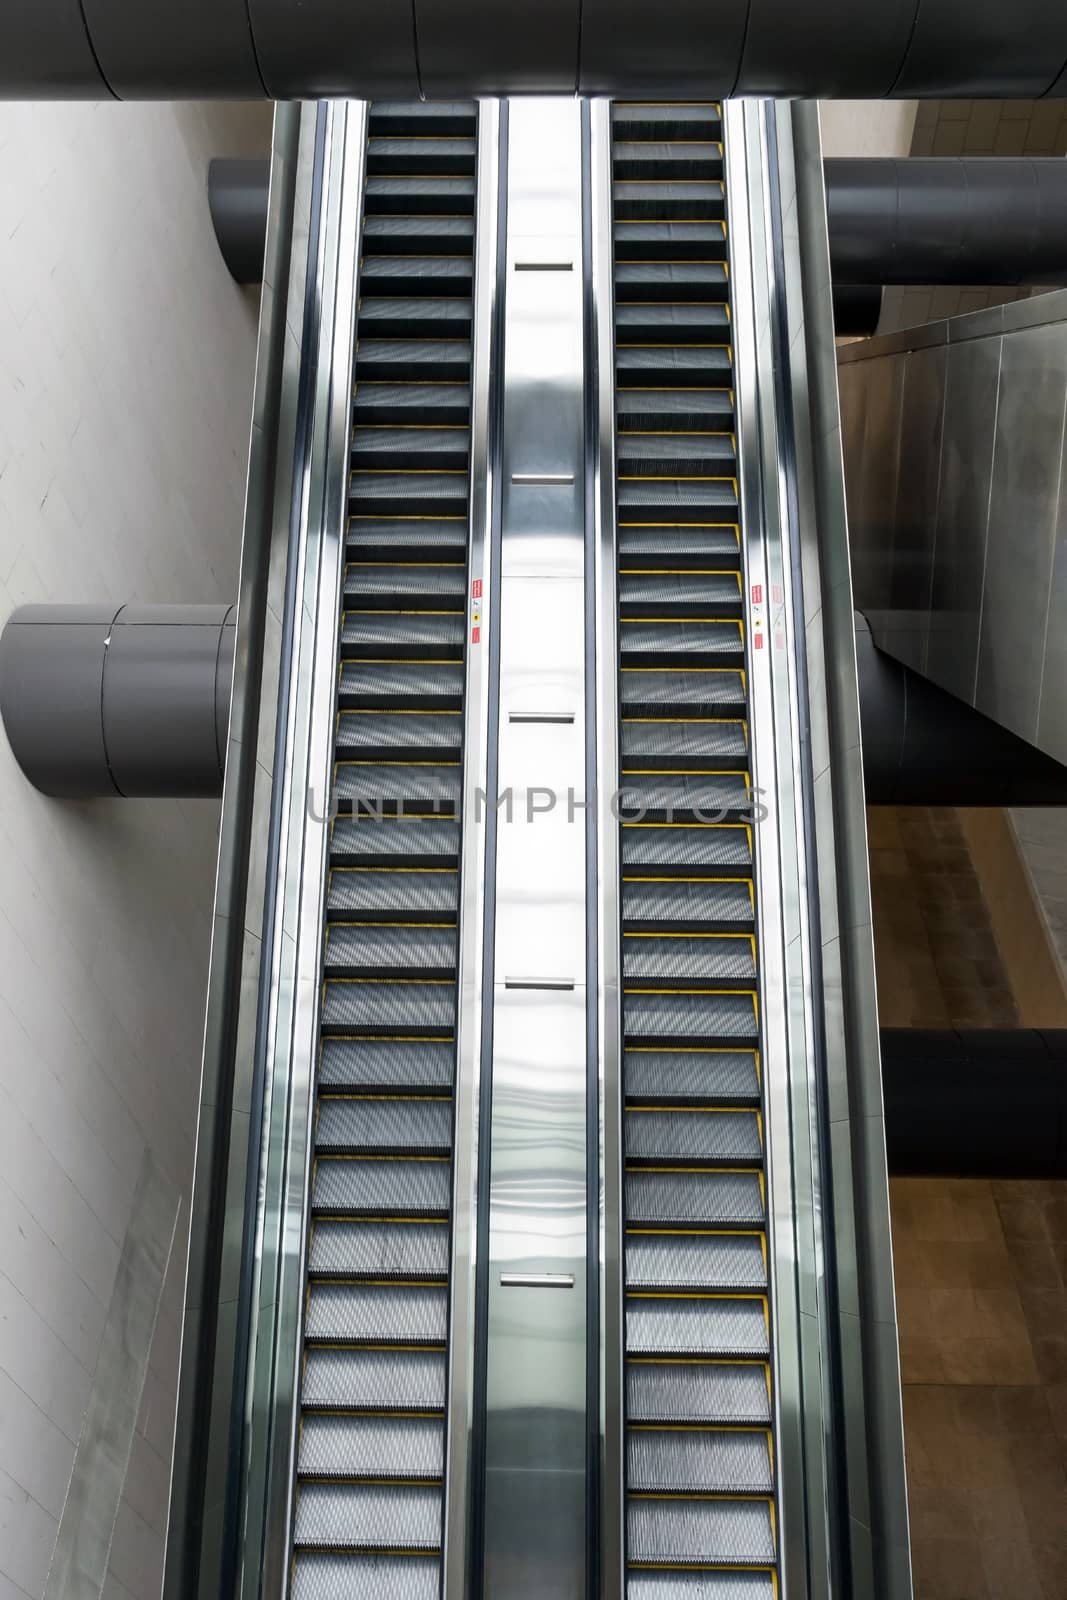 Closeup of the escalator in the big building.